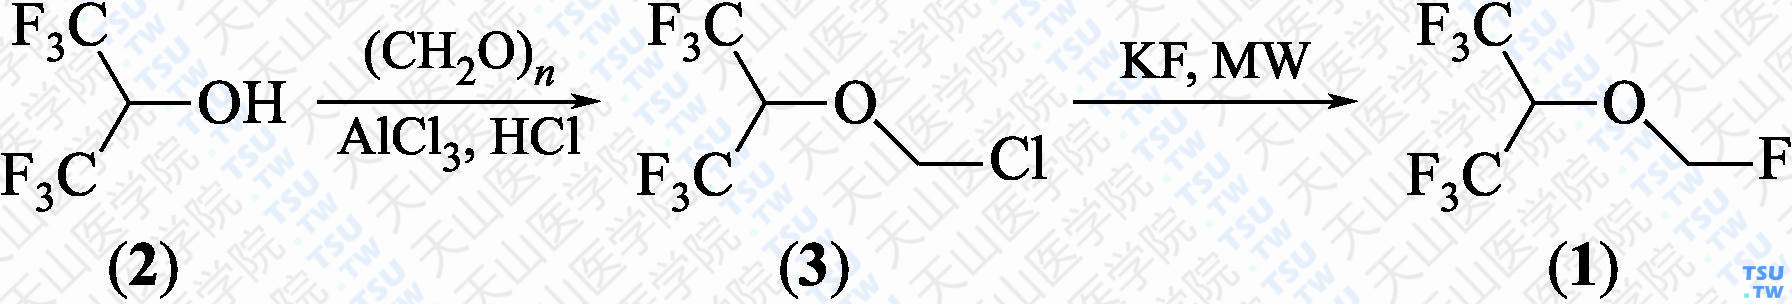 七氟烷（分子式：C<sub>4</sub>H<sub>3</sub>F<sub>7</sub>O）的合成方法路线及其结构式